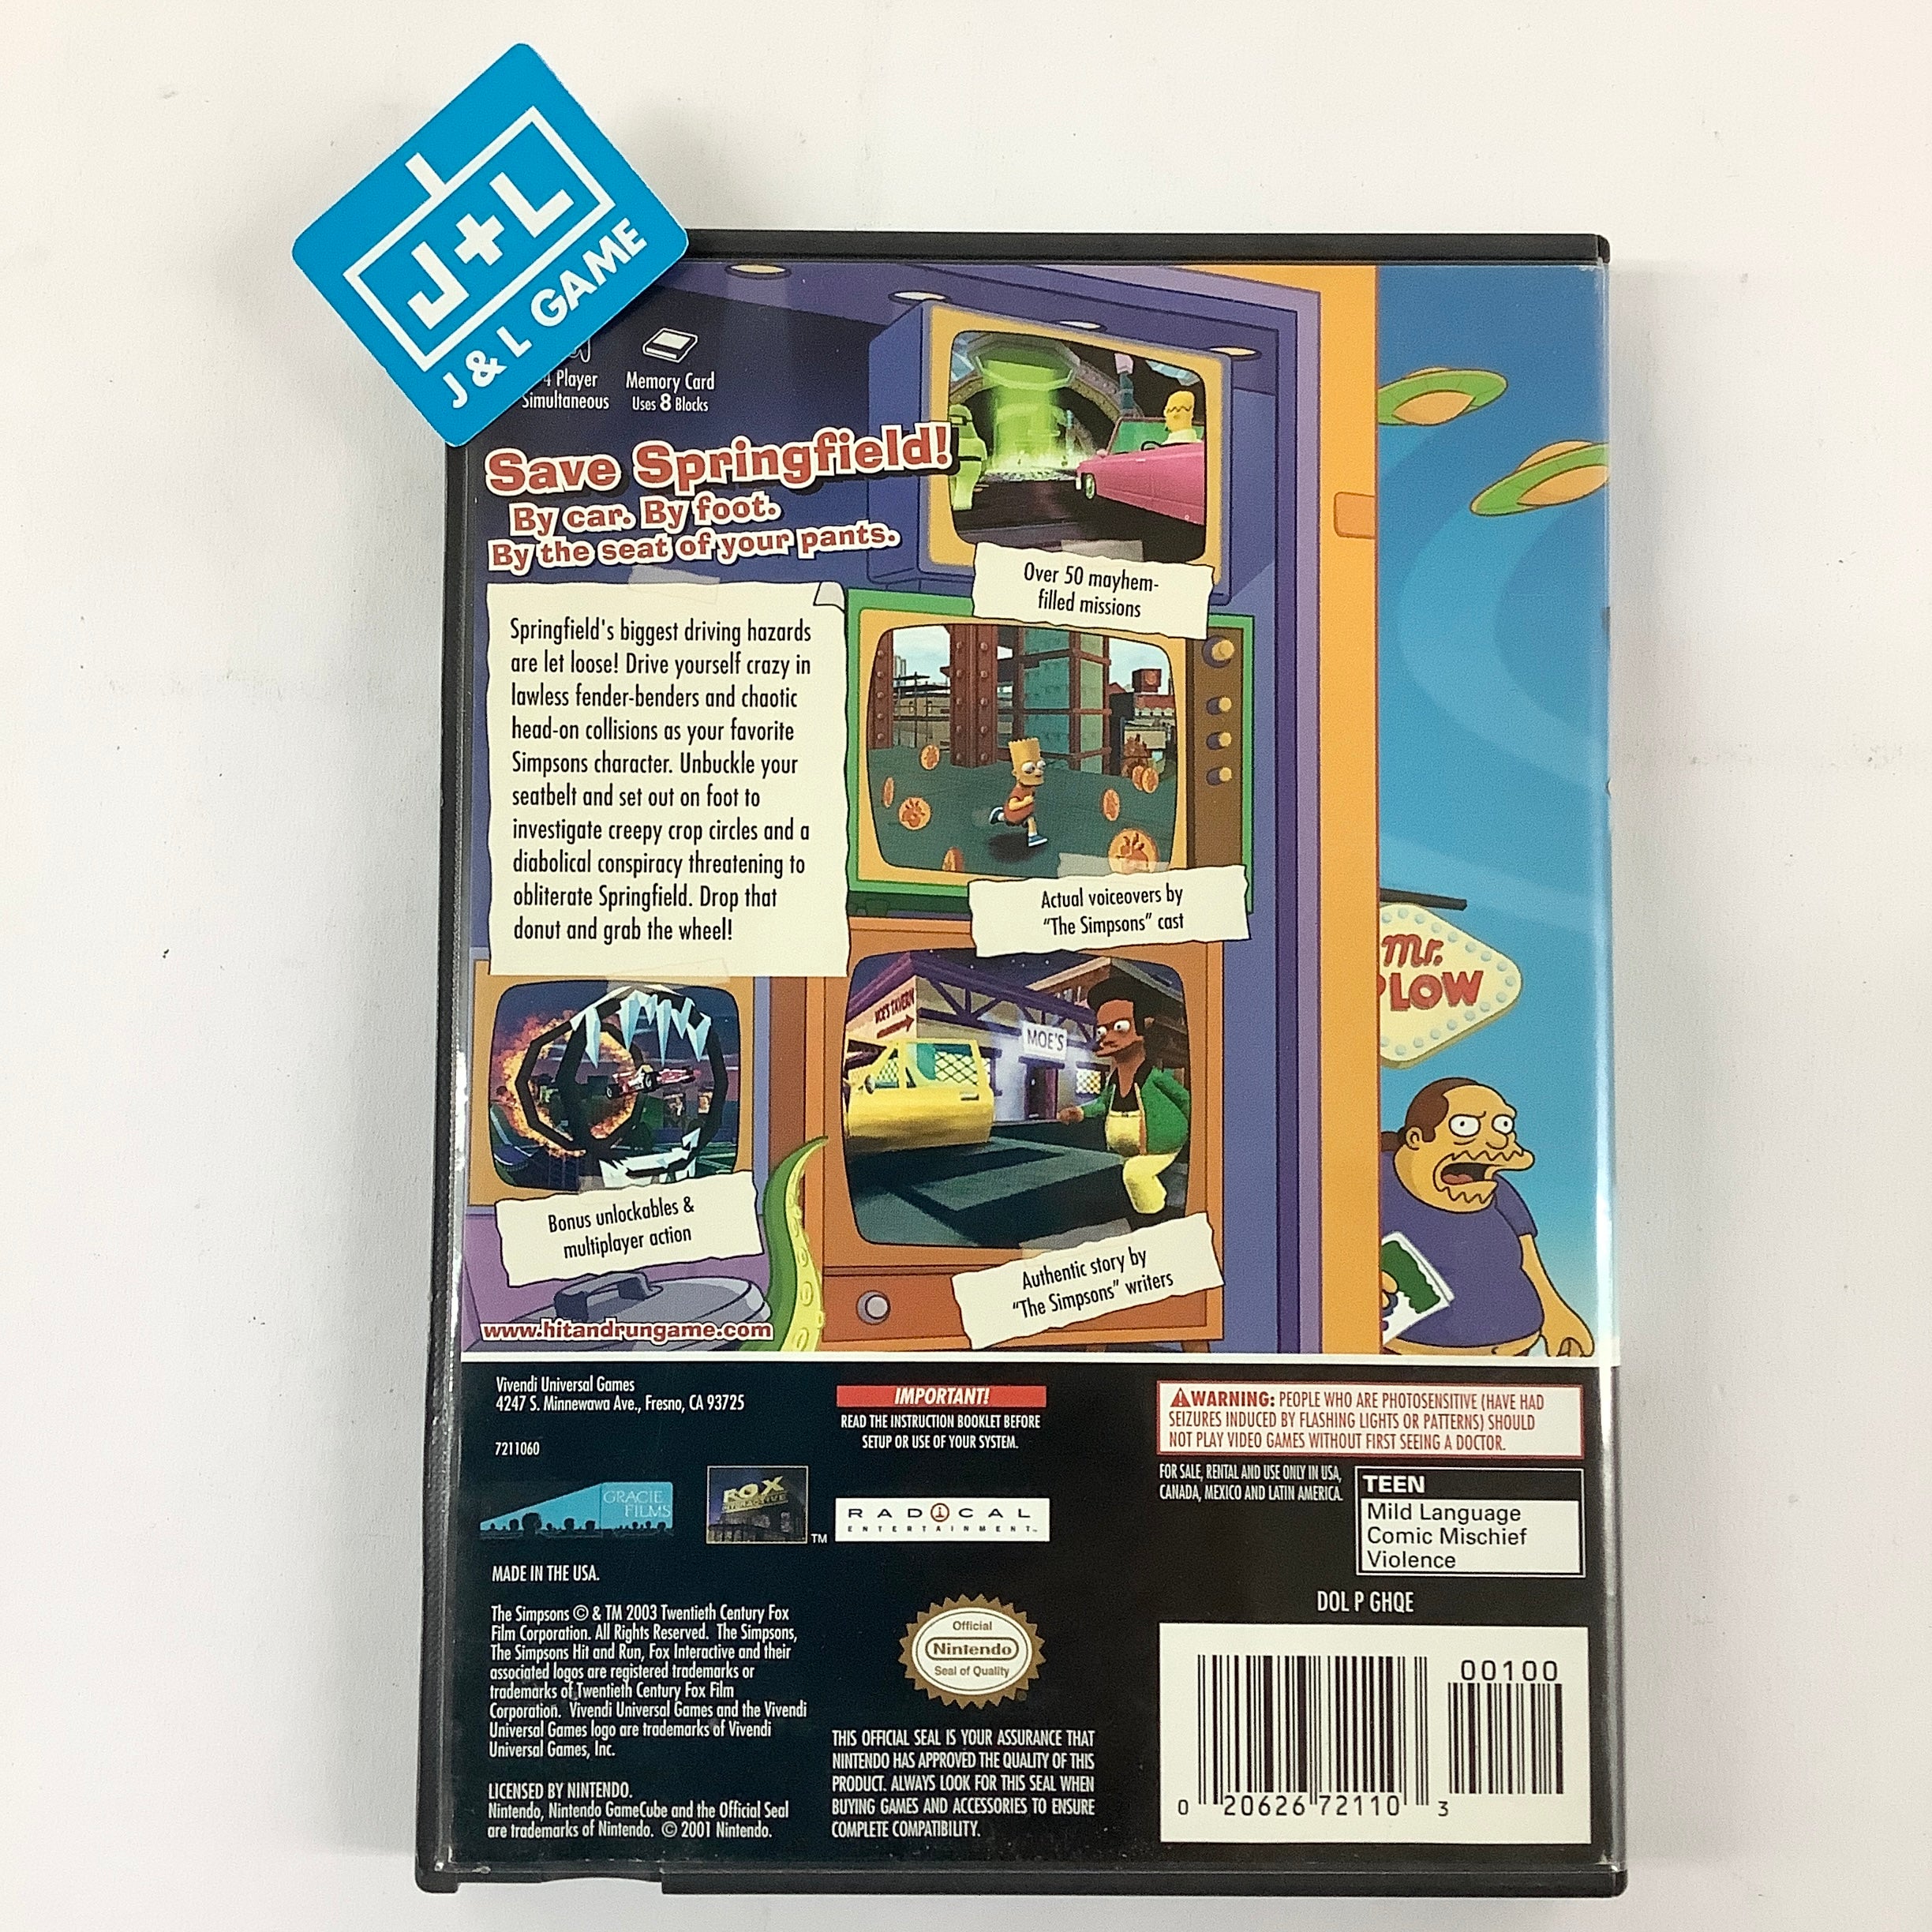 The Simpsons Hit & Run - (GC) GameCube [Pre-Owned] Video Games Nintendo   